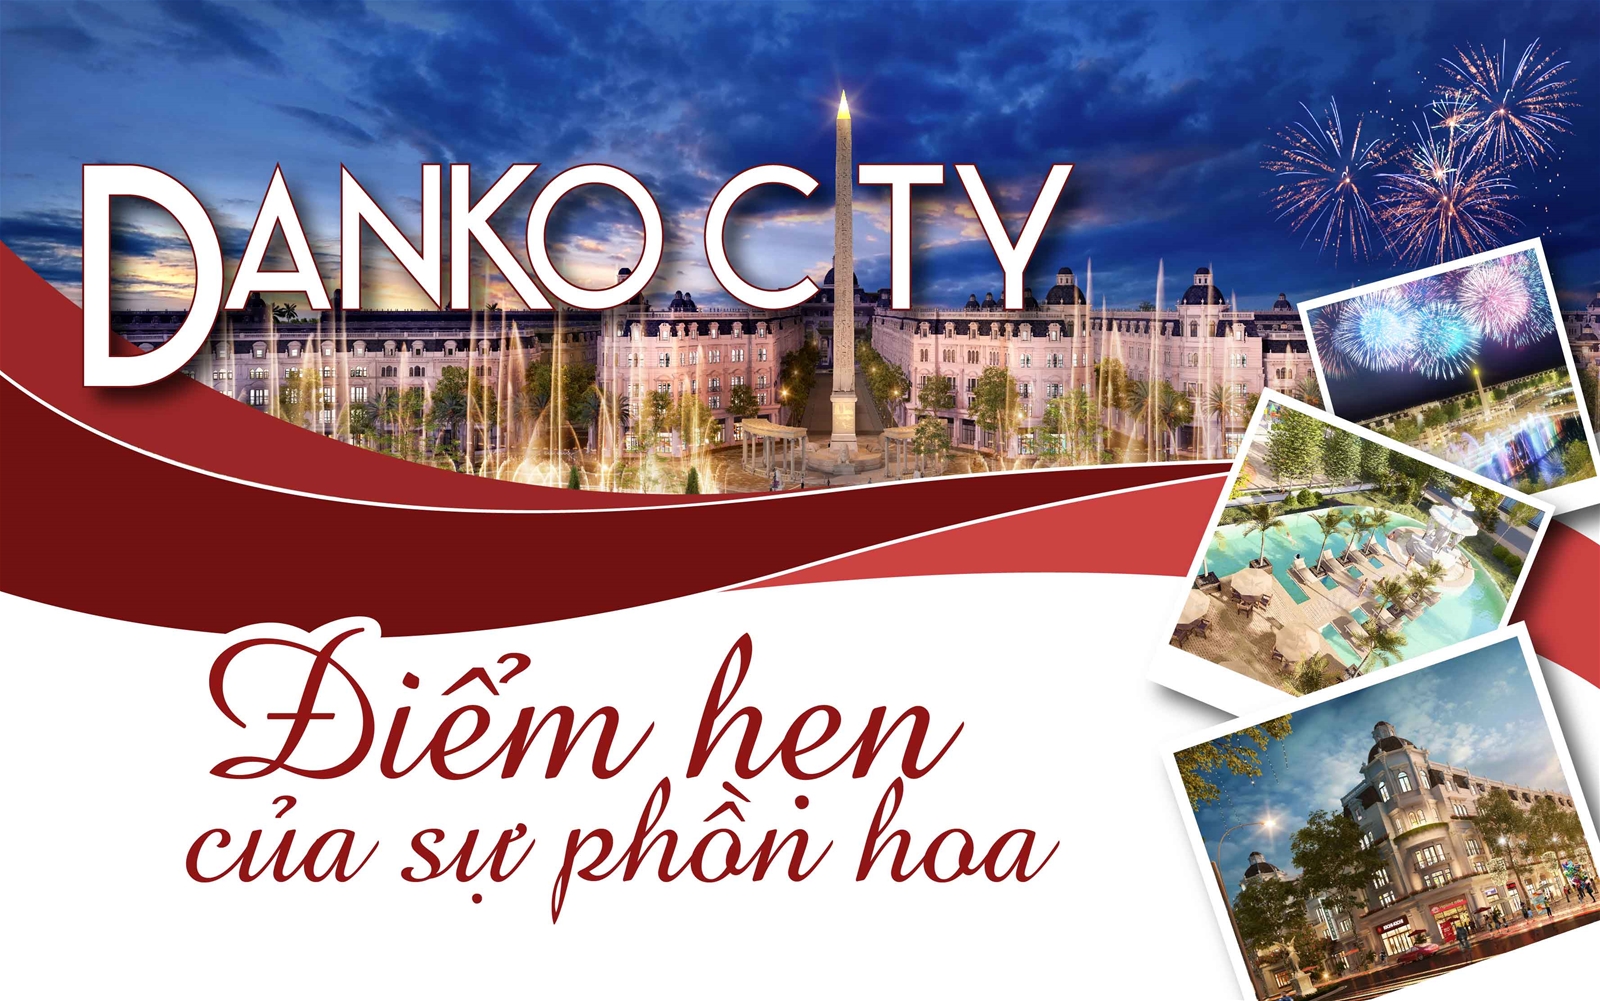 Danko City - điểm hẹn của sự phồn hoa